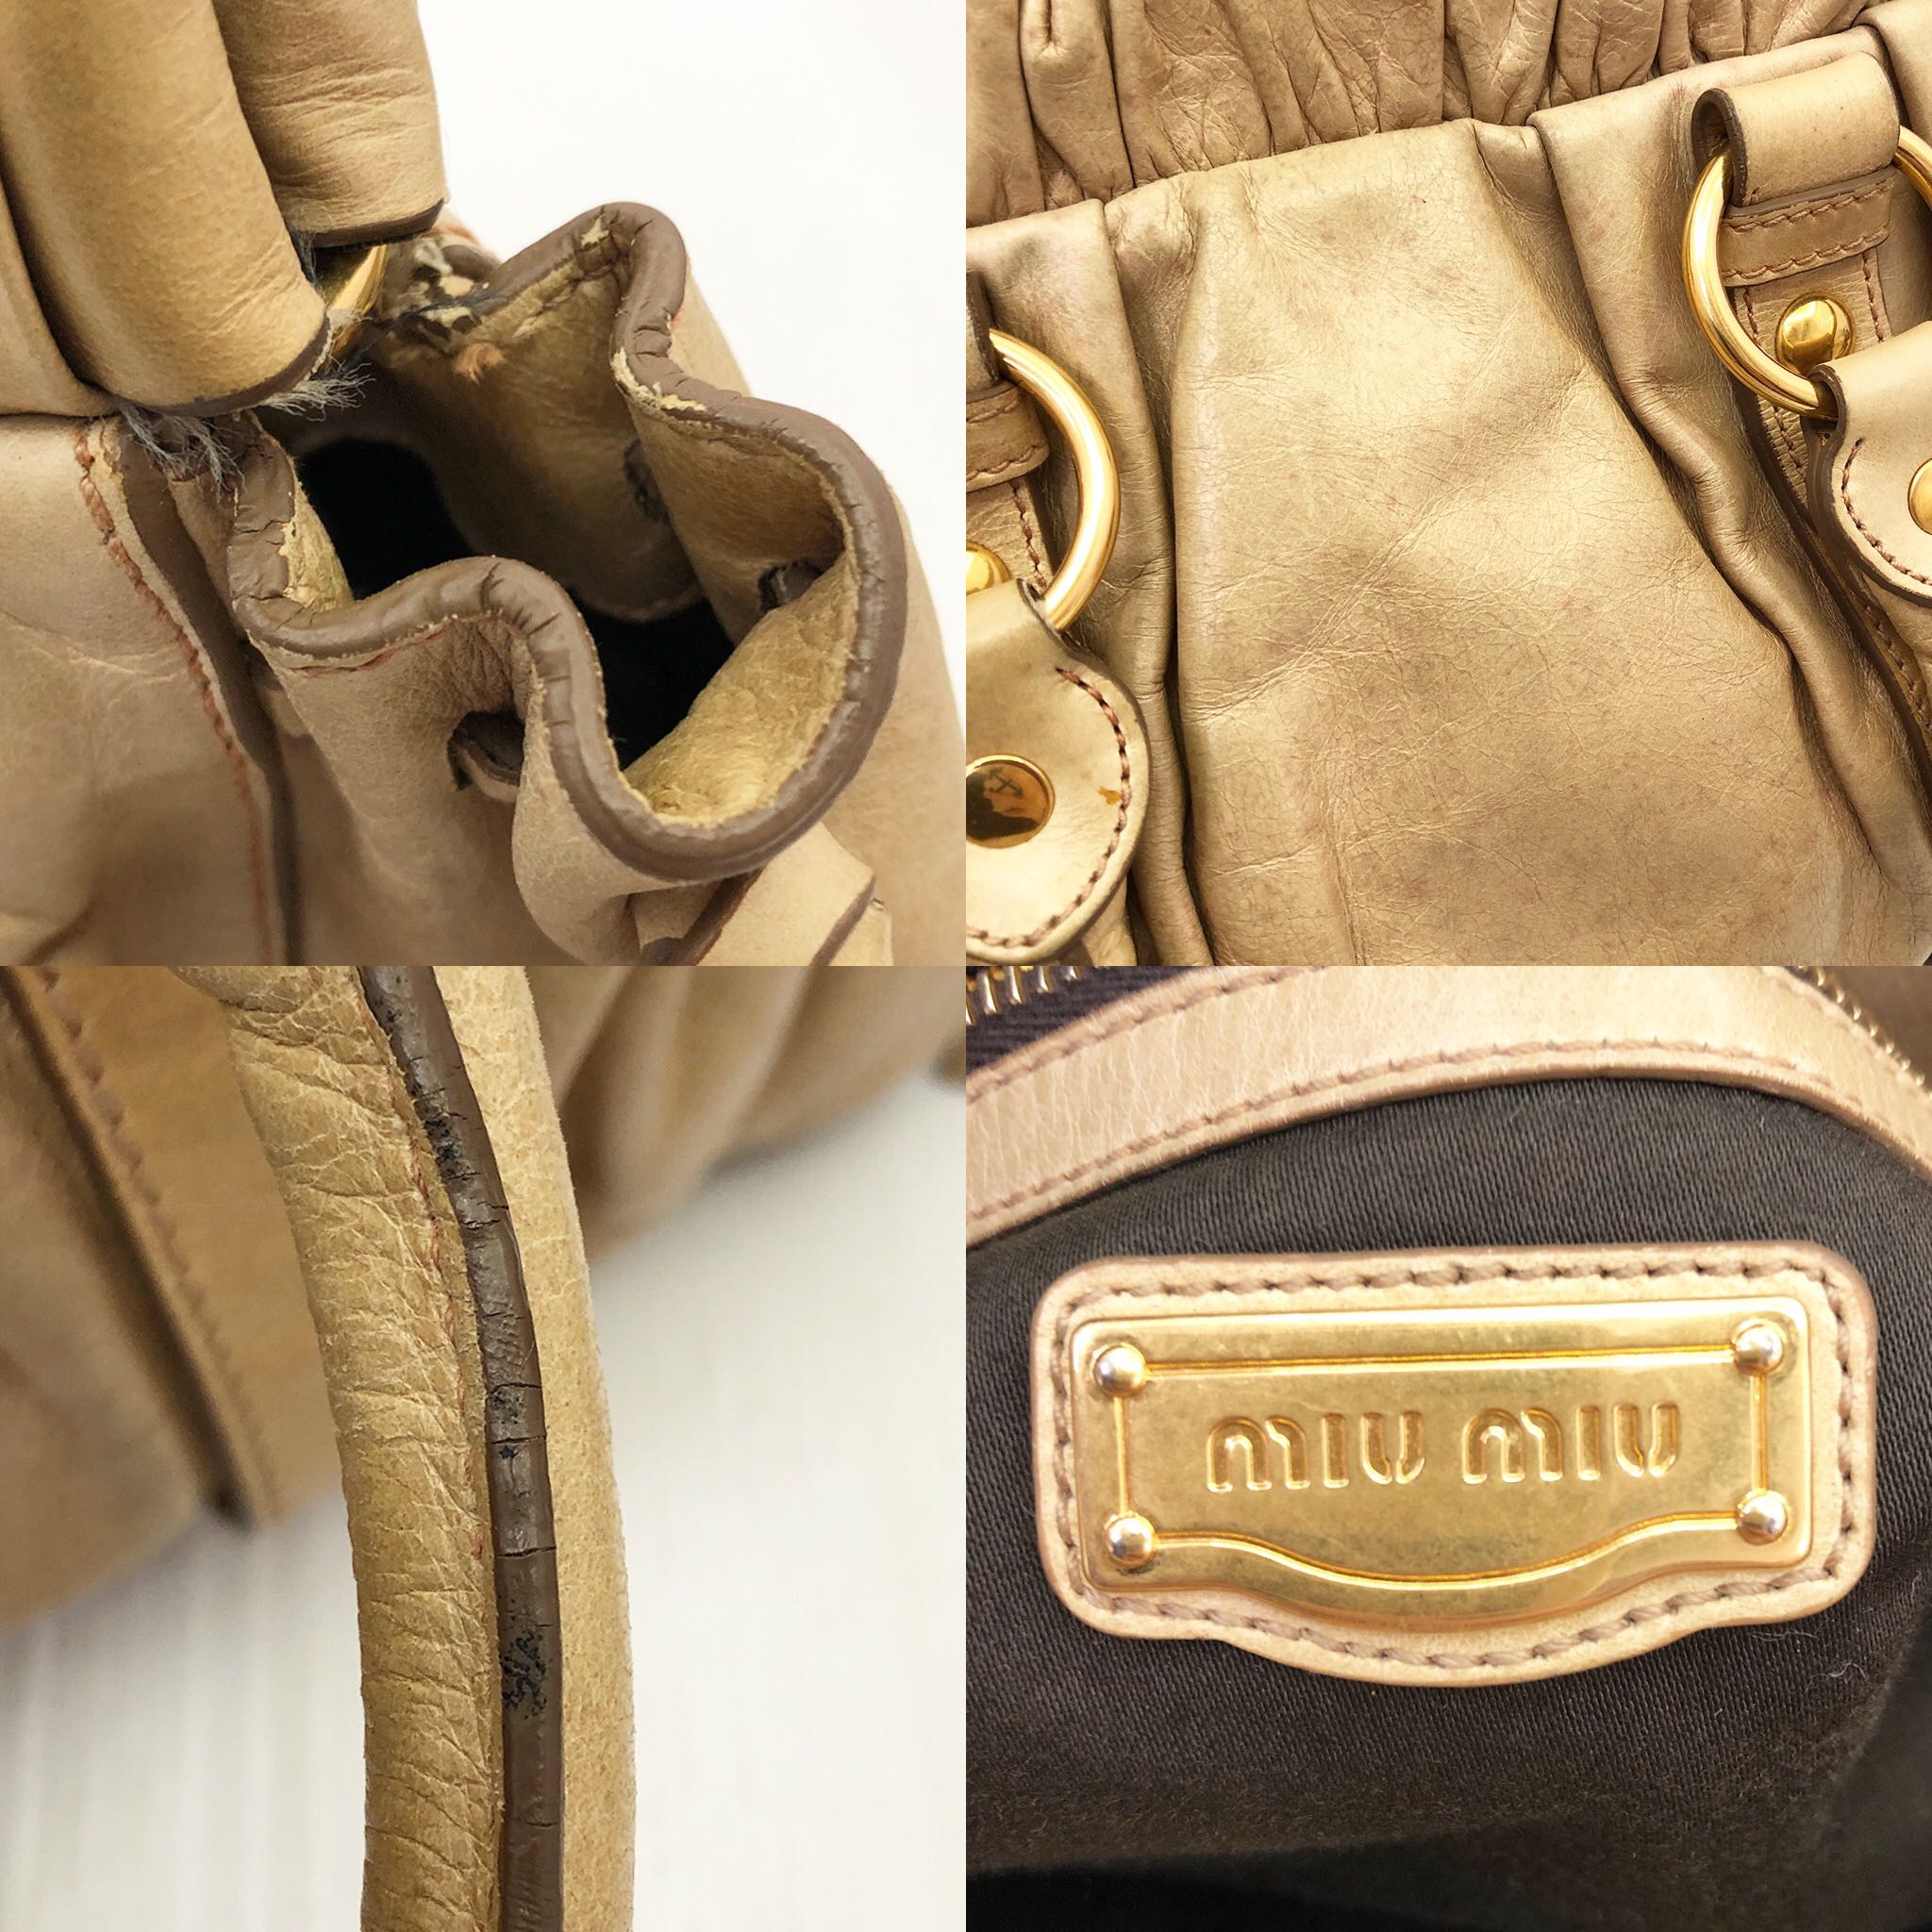 Leather handbag Miu Miu Beige in Leather - 33034138